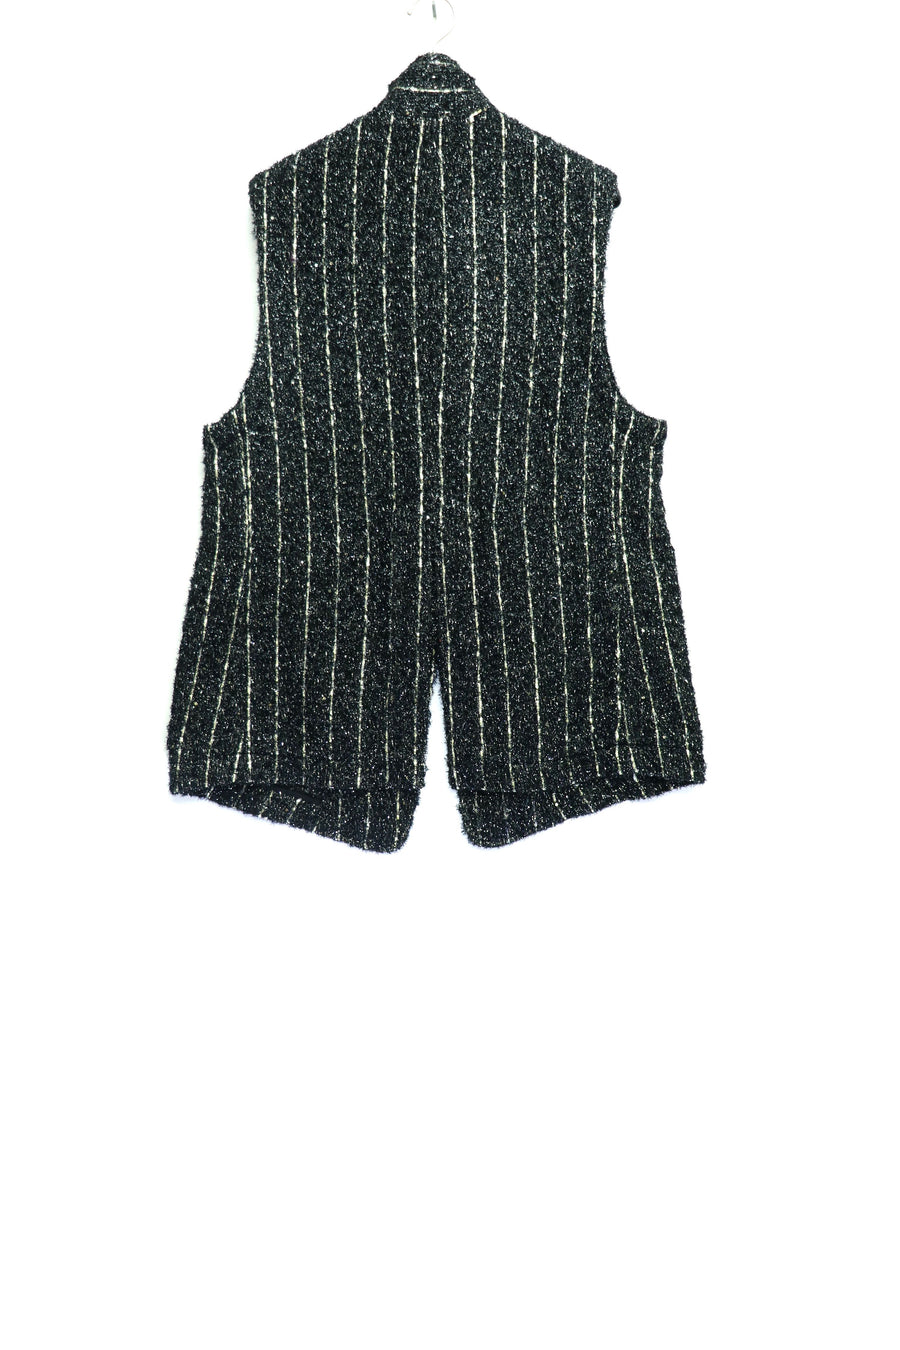 BED j.w. FORD  Glitter Stripe Vest(BLACK)